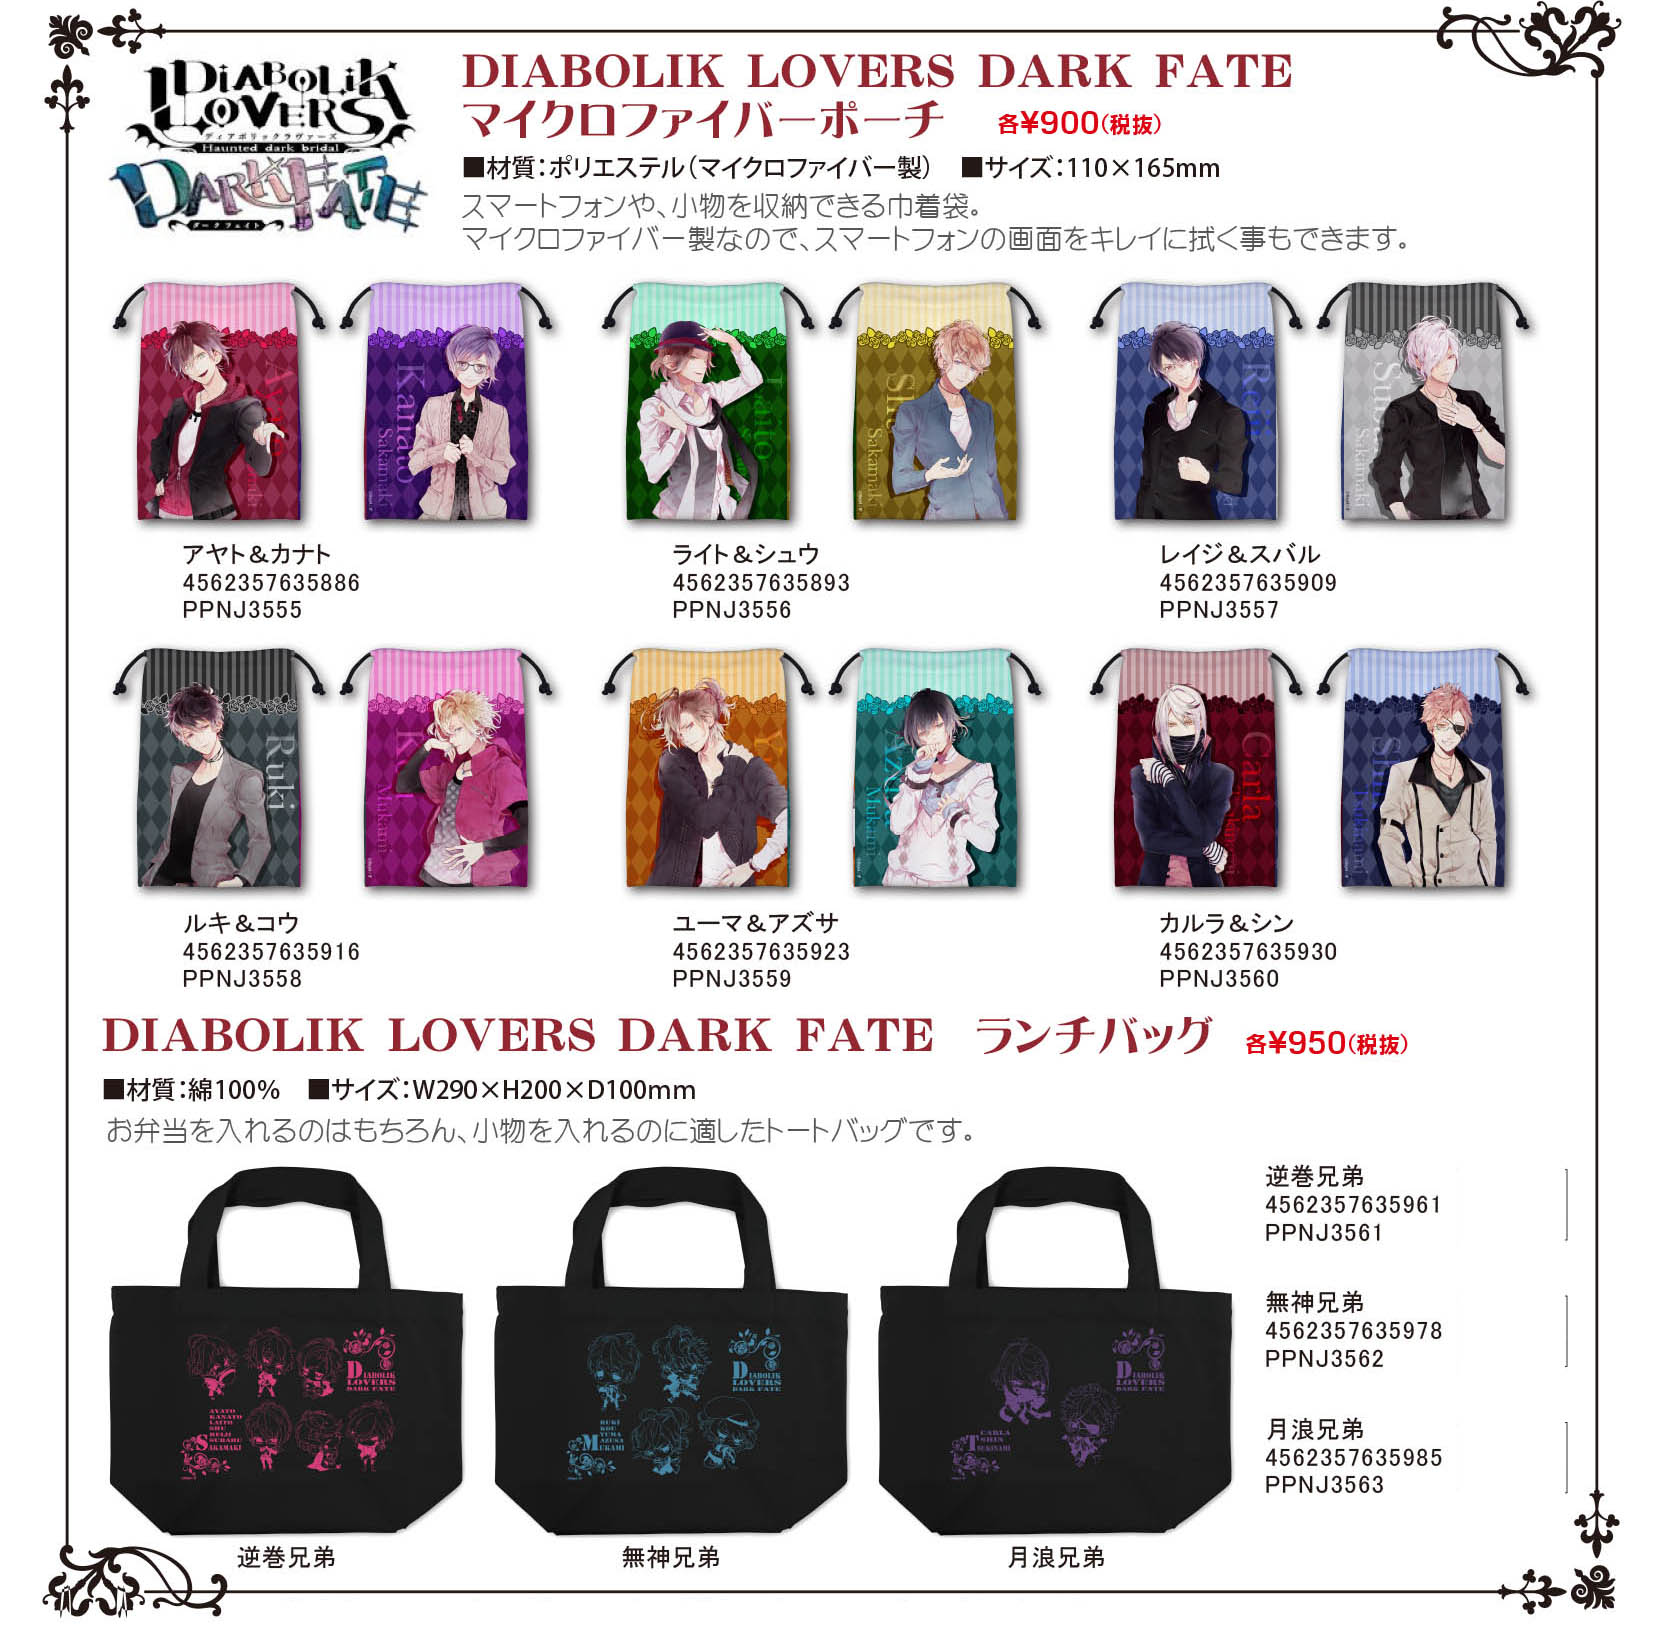 Diabolik Lovers Dark Fate グッズ各種 株式会社マイルストン グループ セット商品詳細